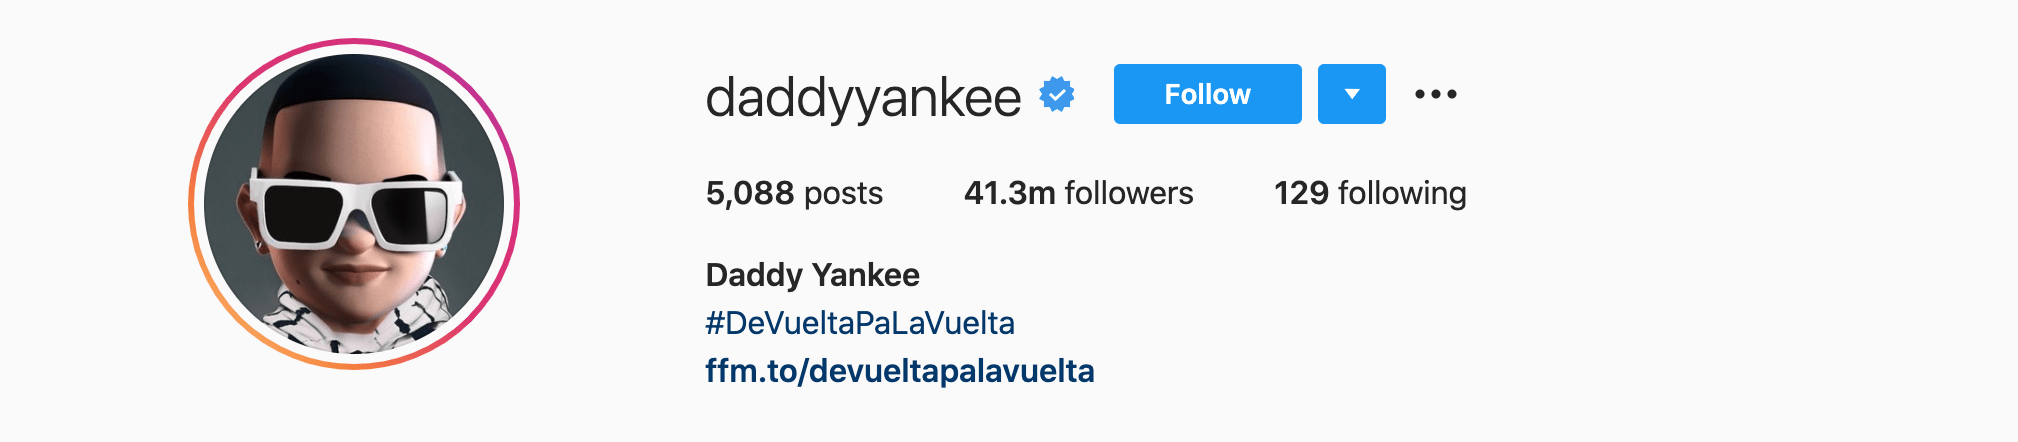 Top Instagram Influencers - DADDY YANKEE